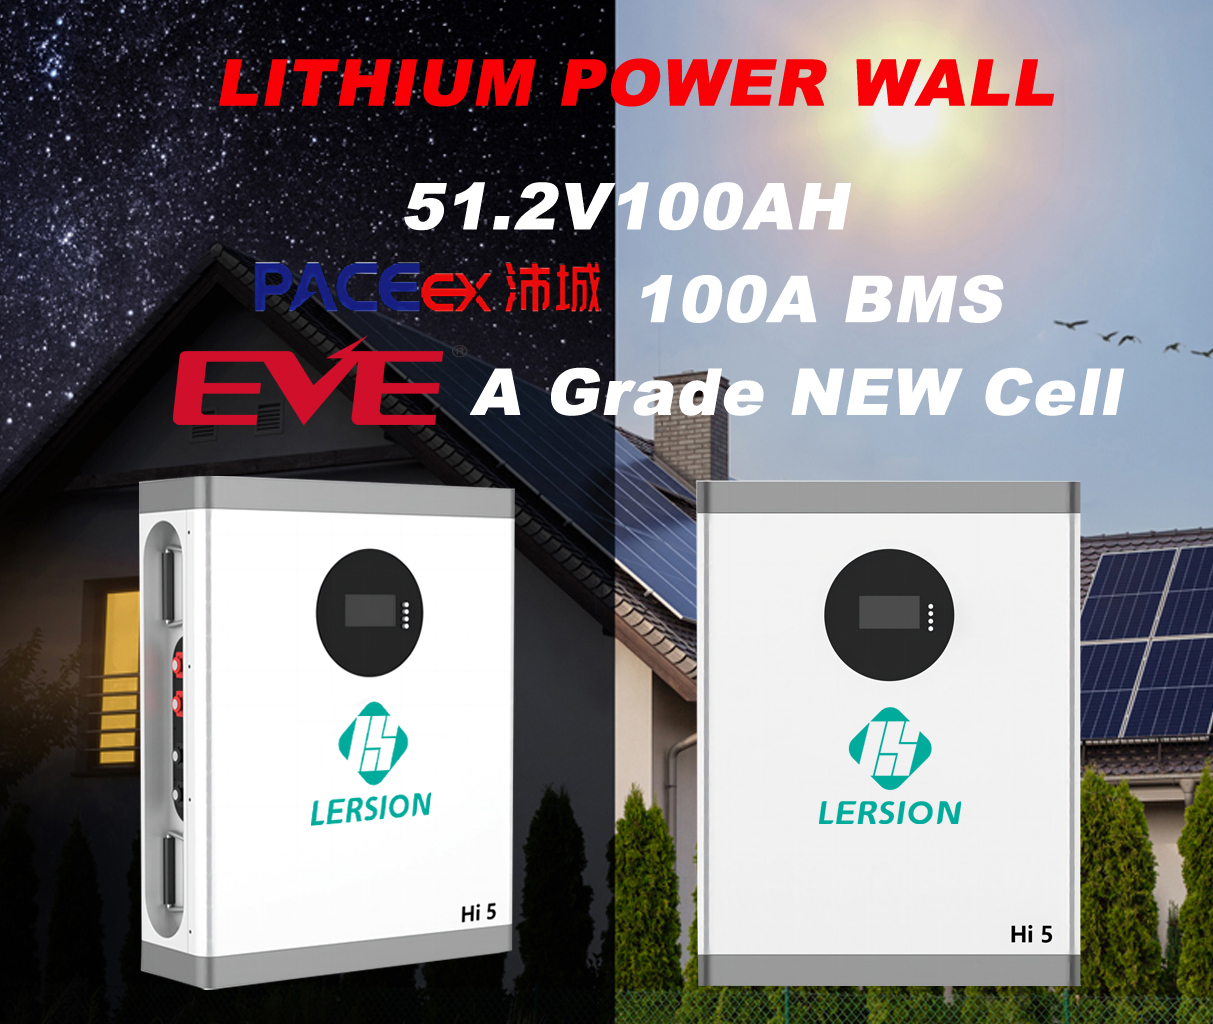 Hi 5 lithium power wall